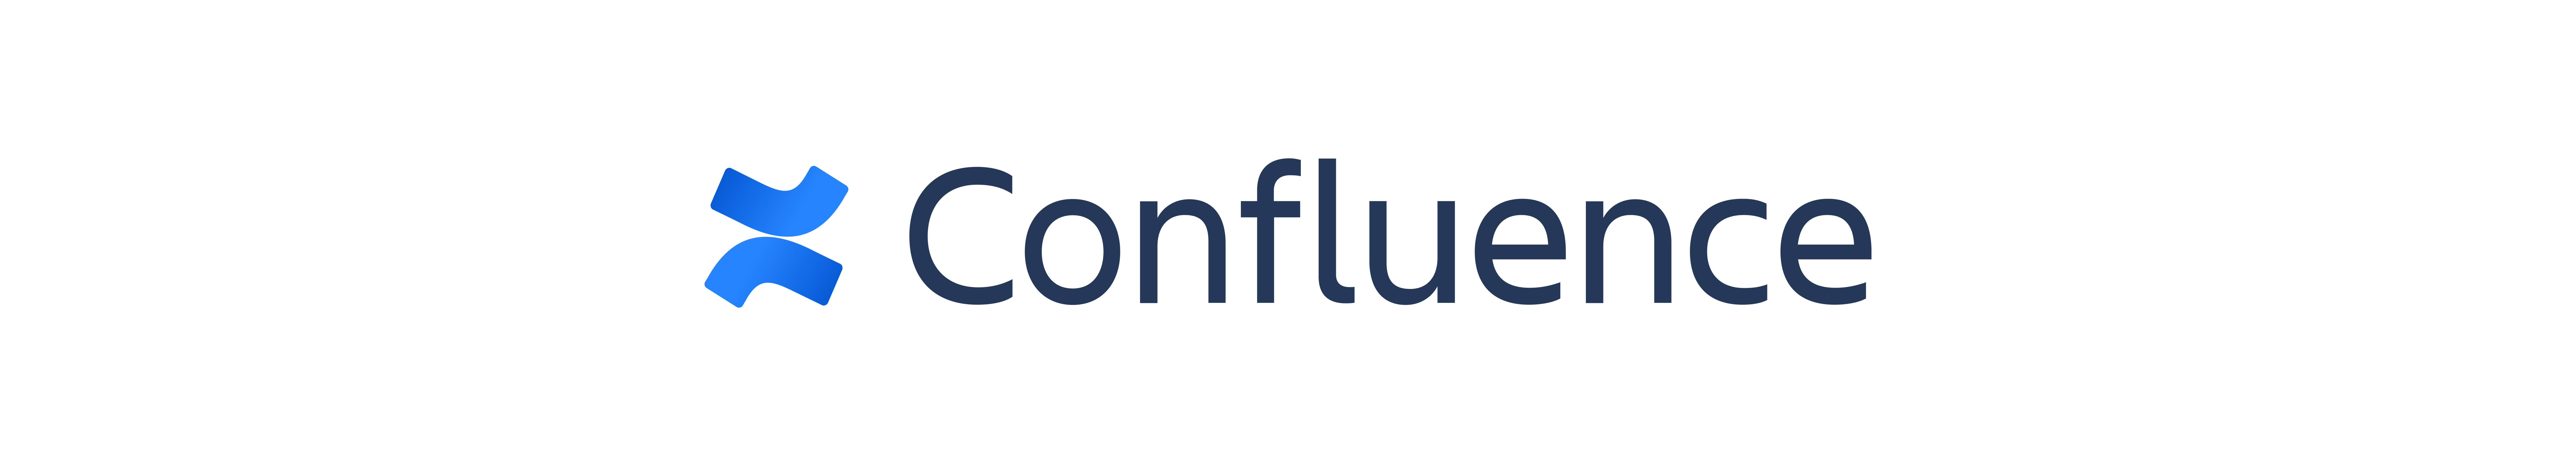 Confluence-standard_logo-1